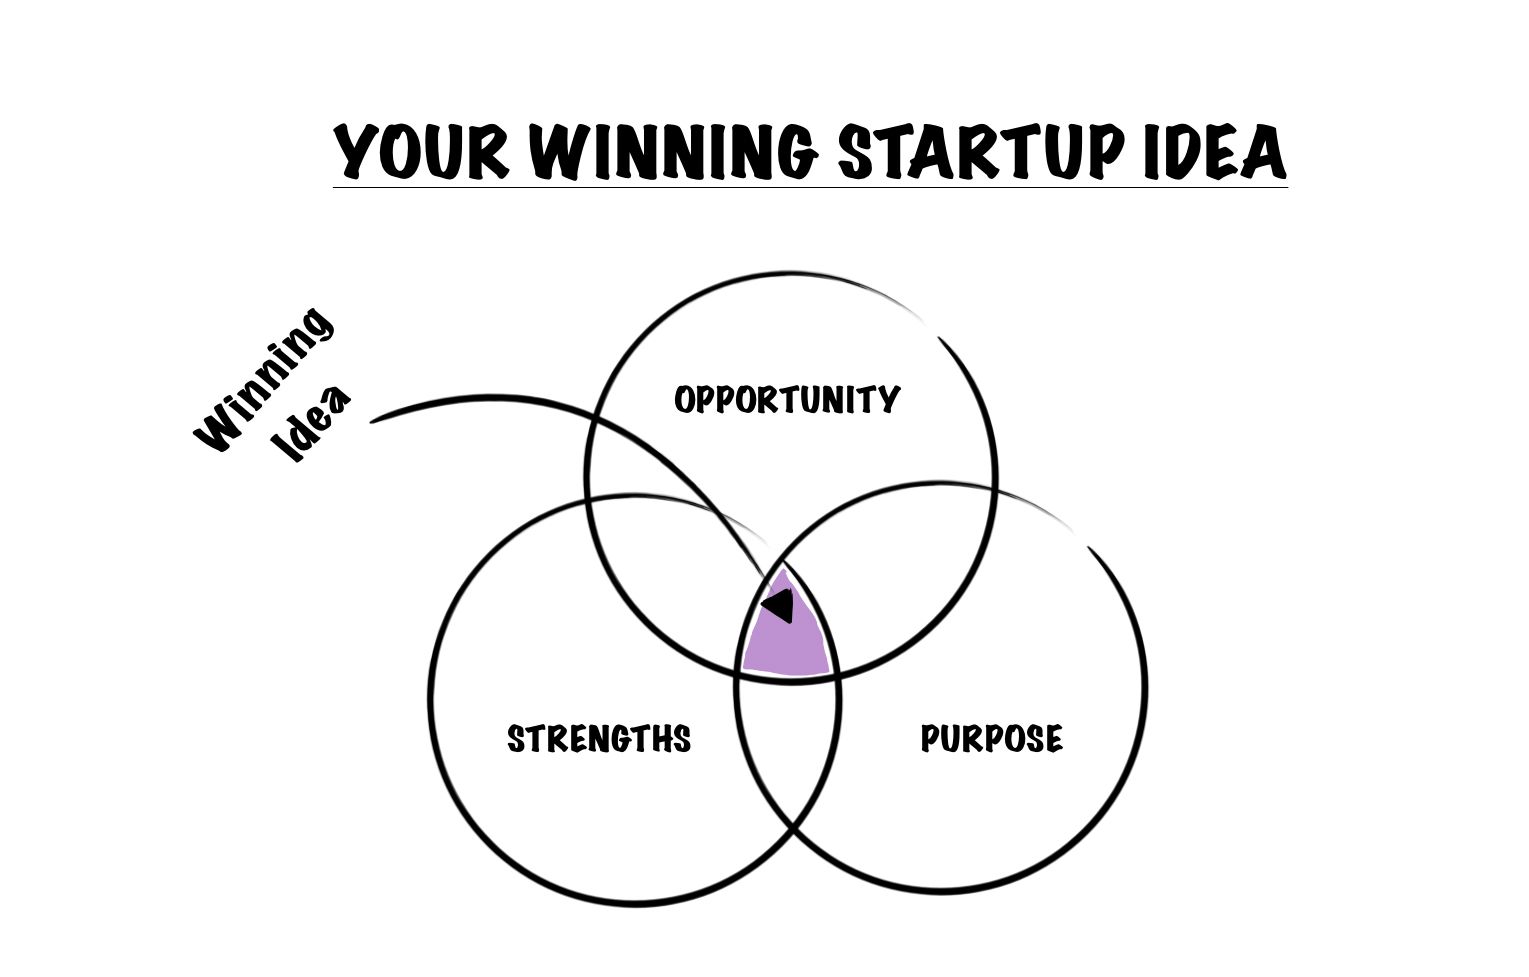 Find your winning startup idea